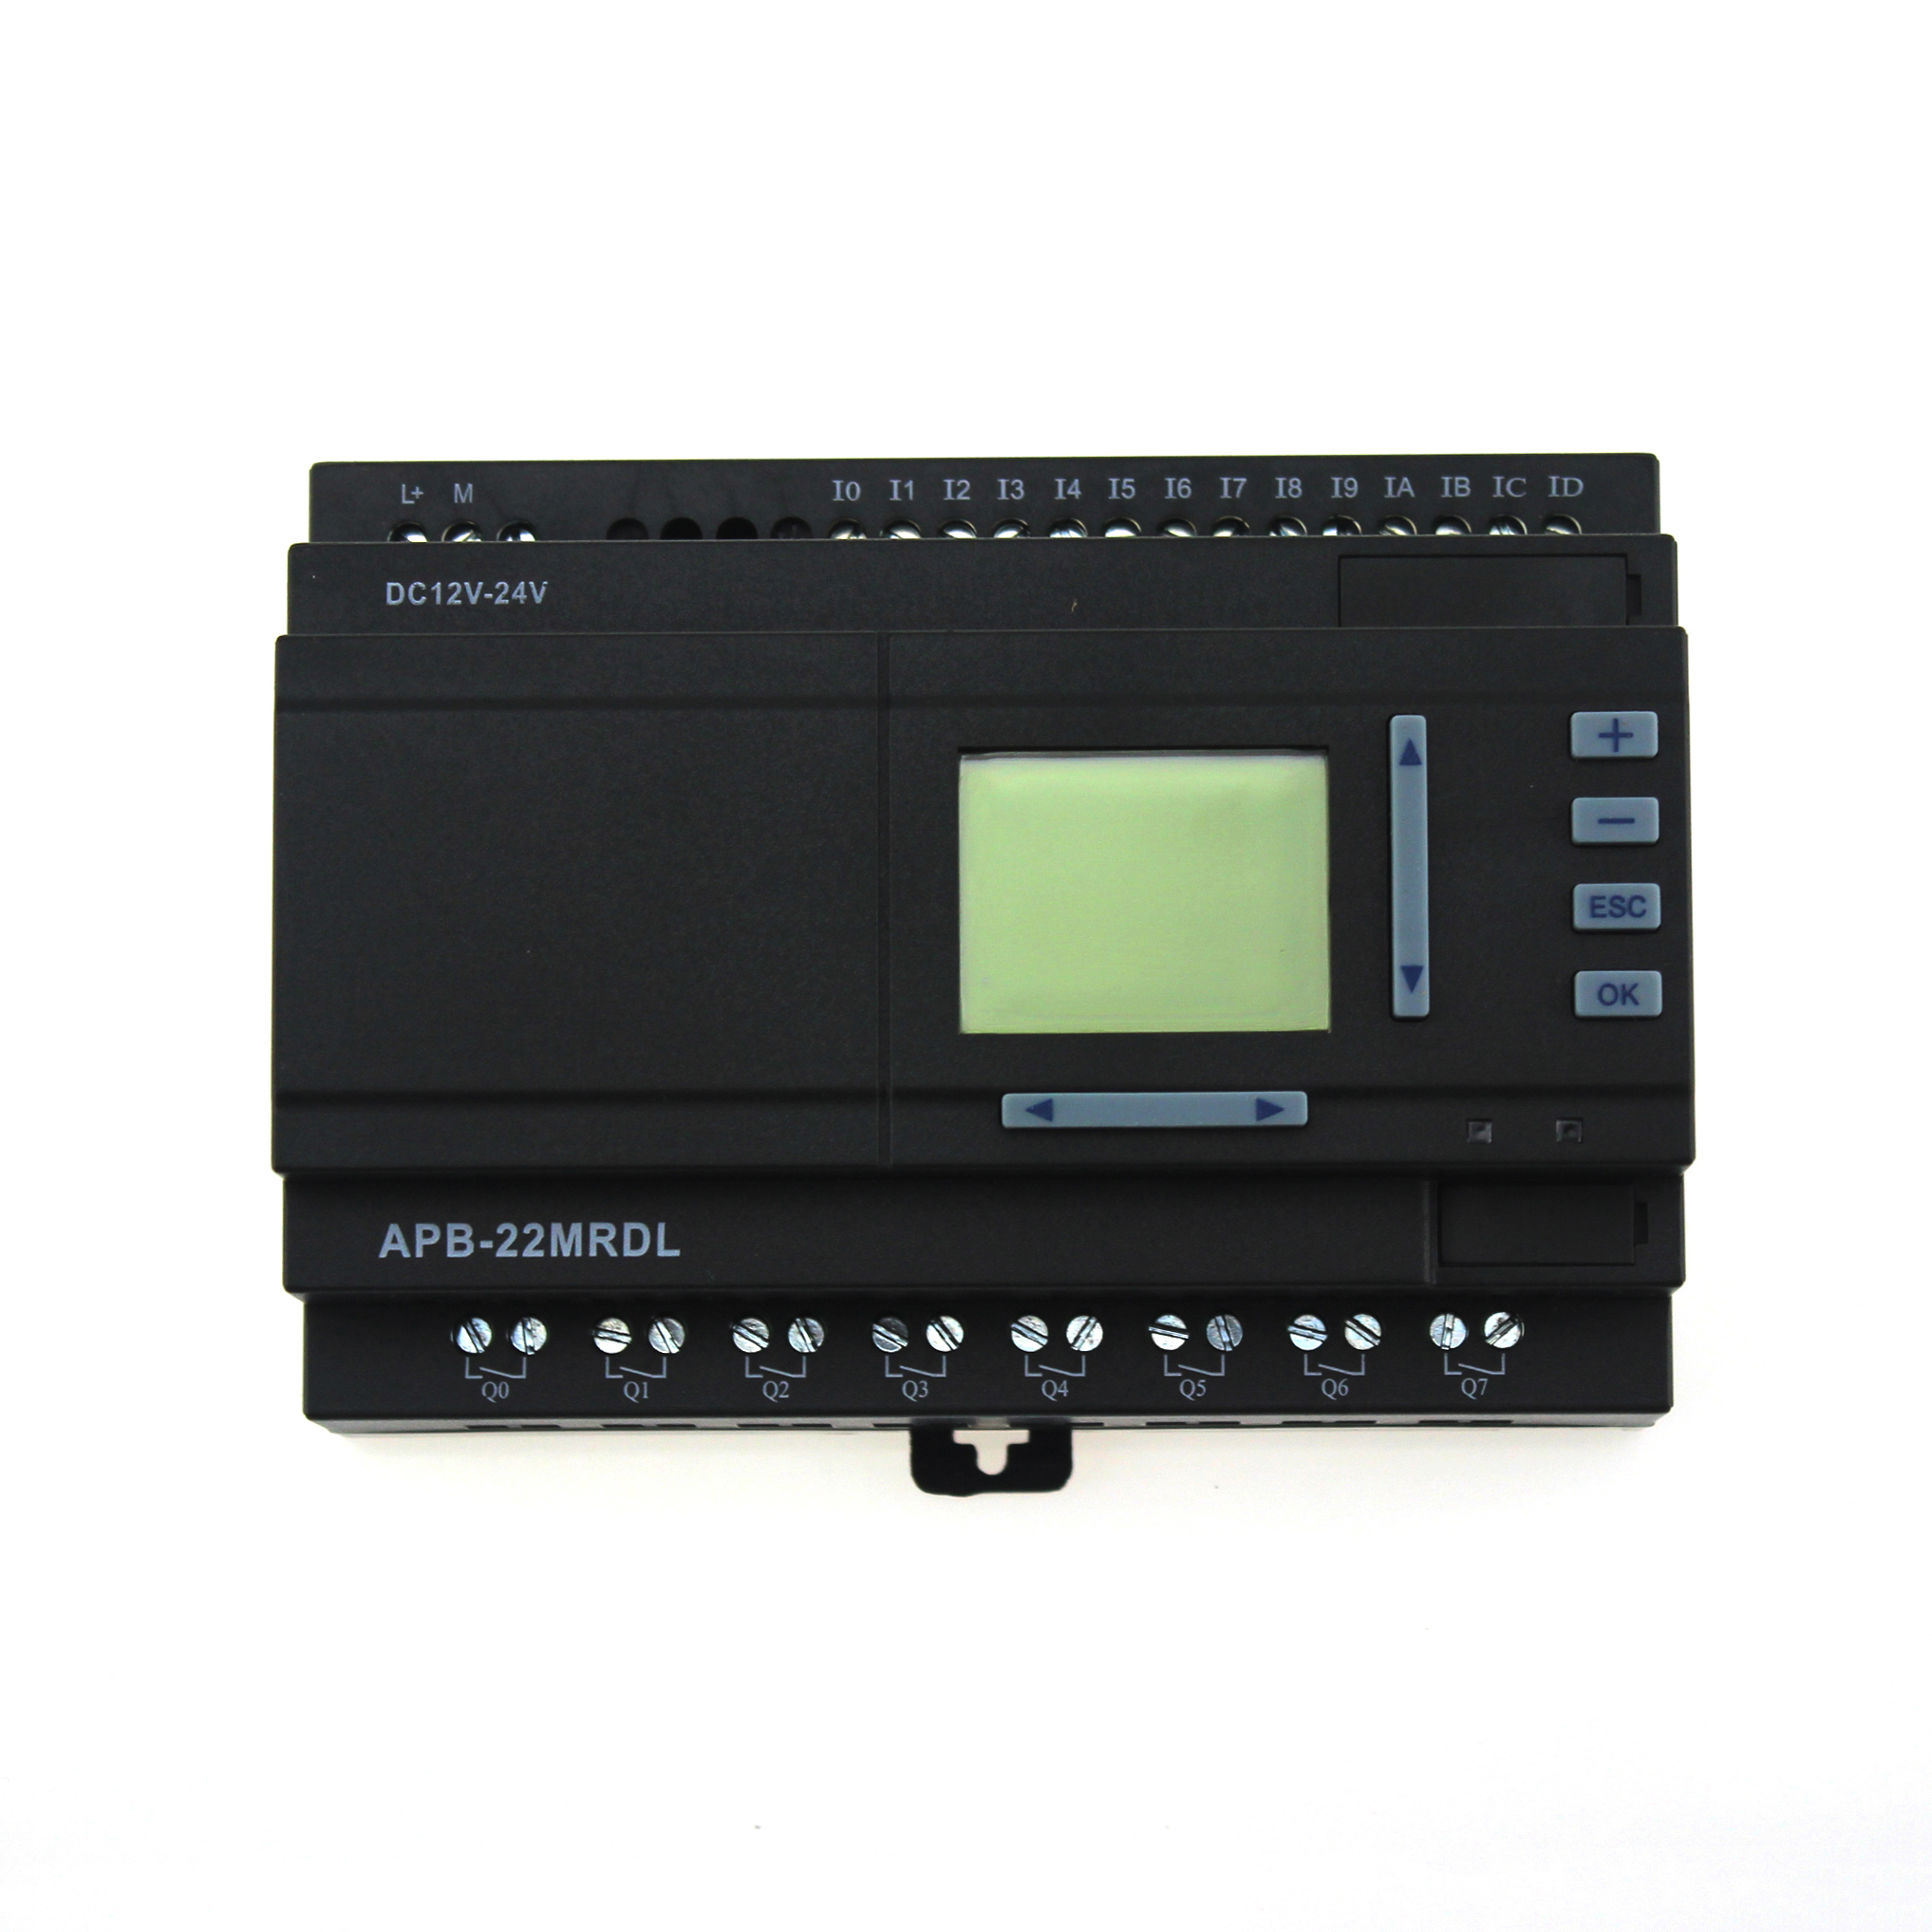 APB-22MRDL APB Series Programmable Logic Controller PLC with LCD